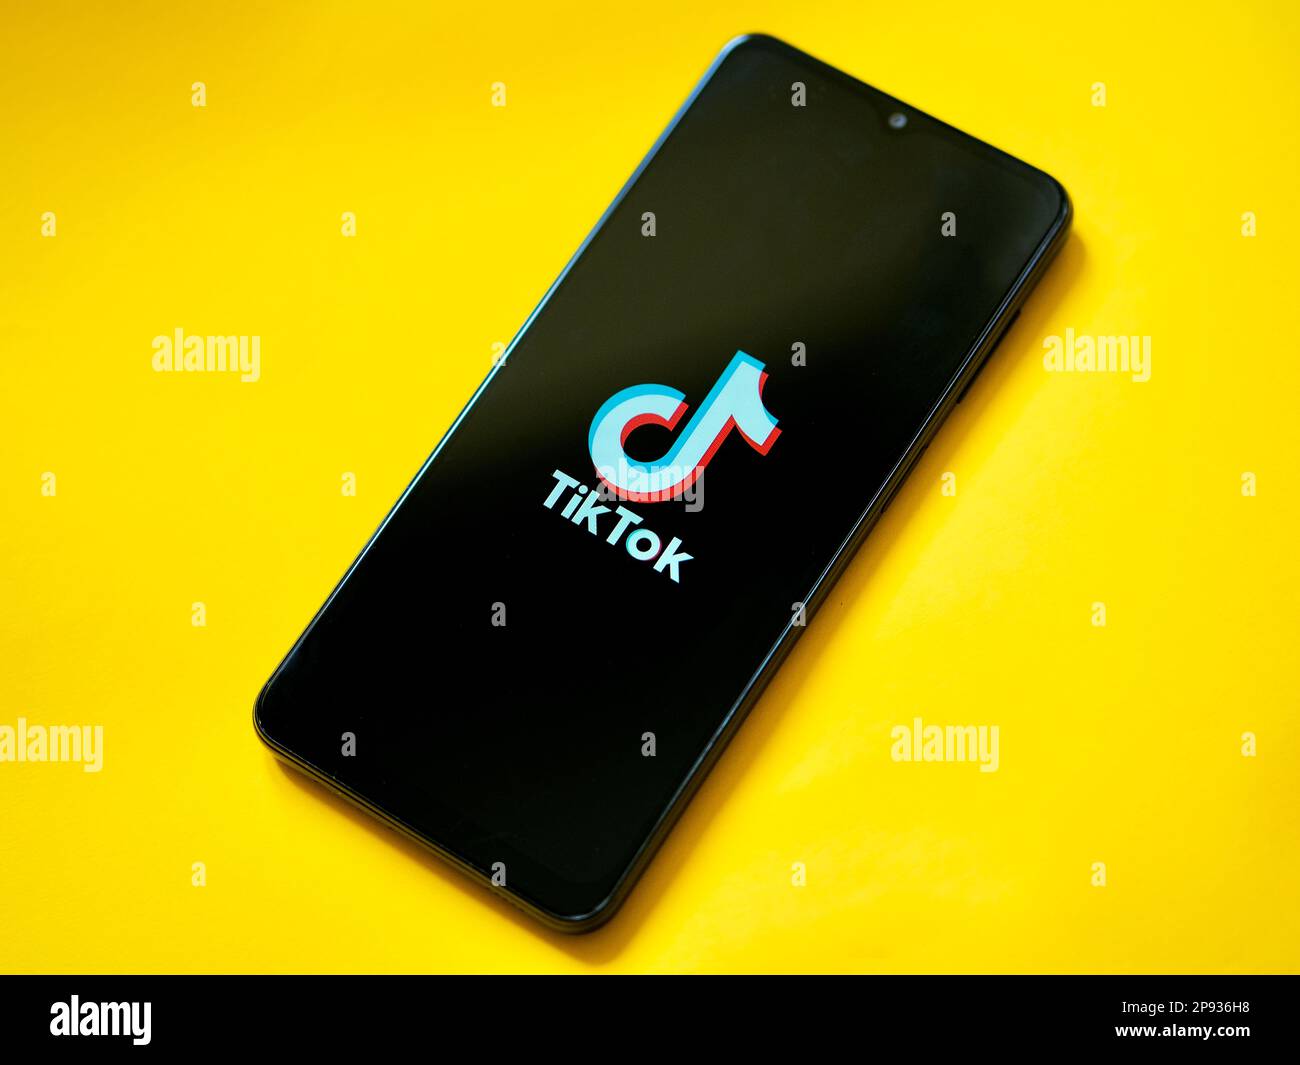 Mobile phone device showing the TikTok logo Stock Photo